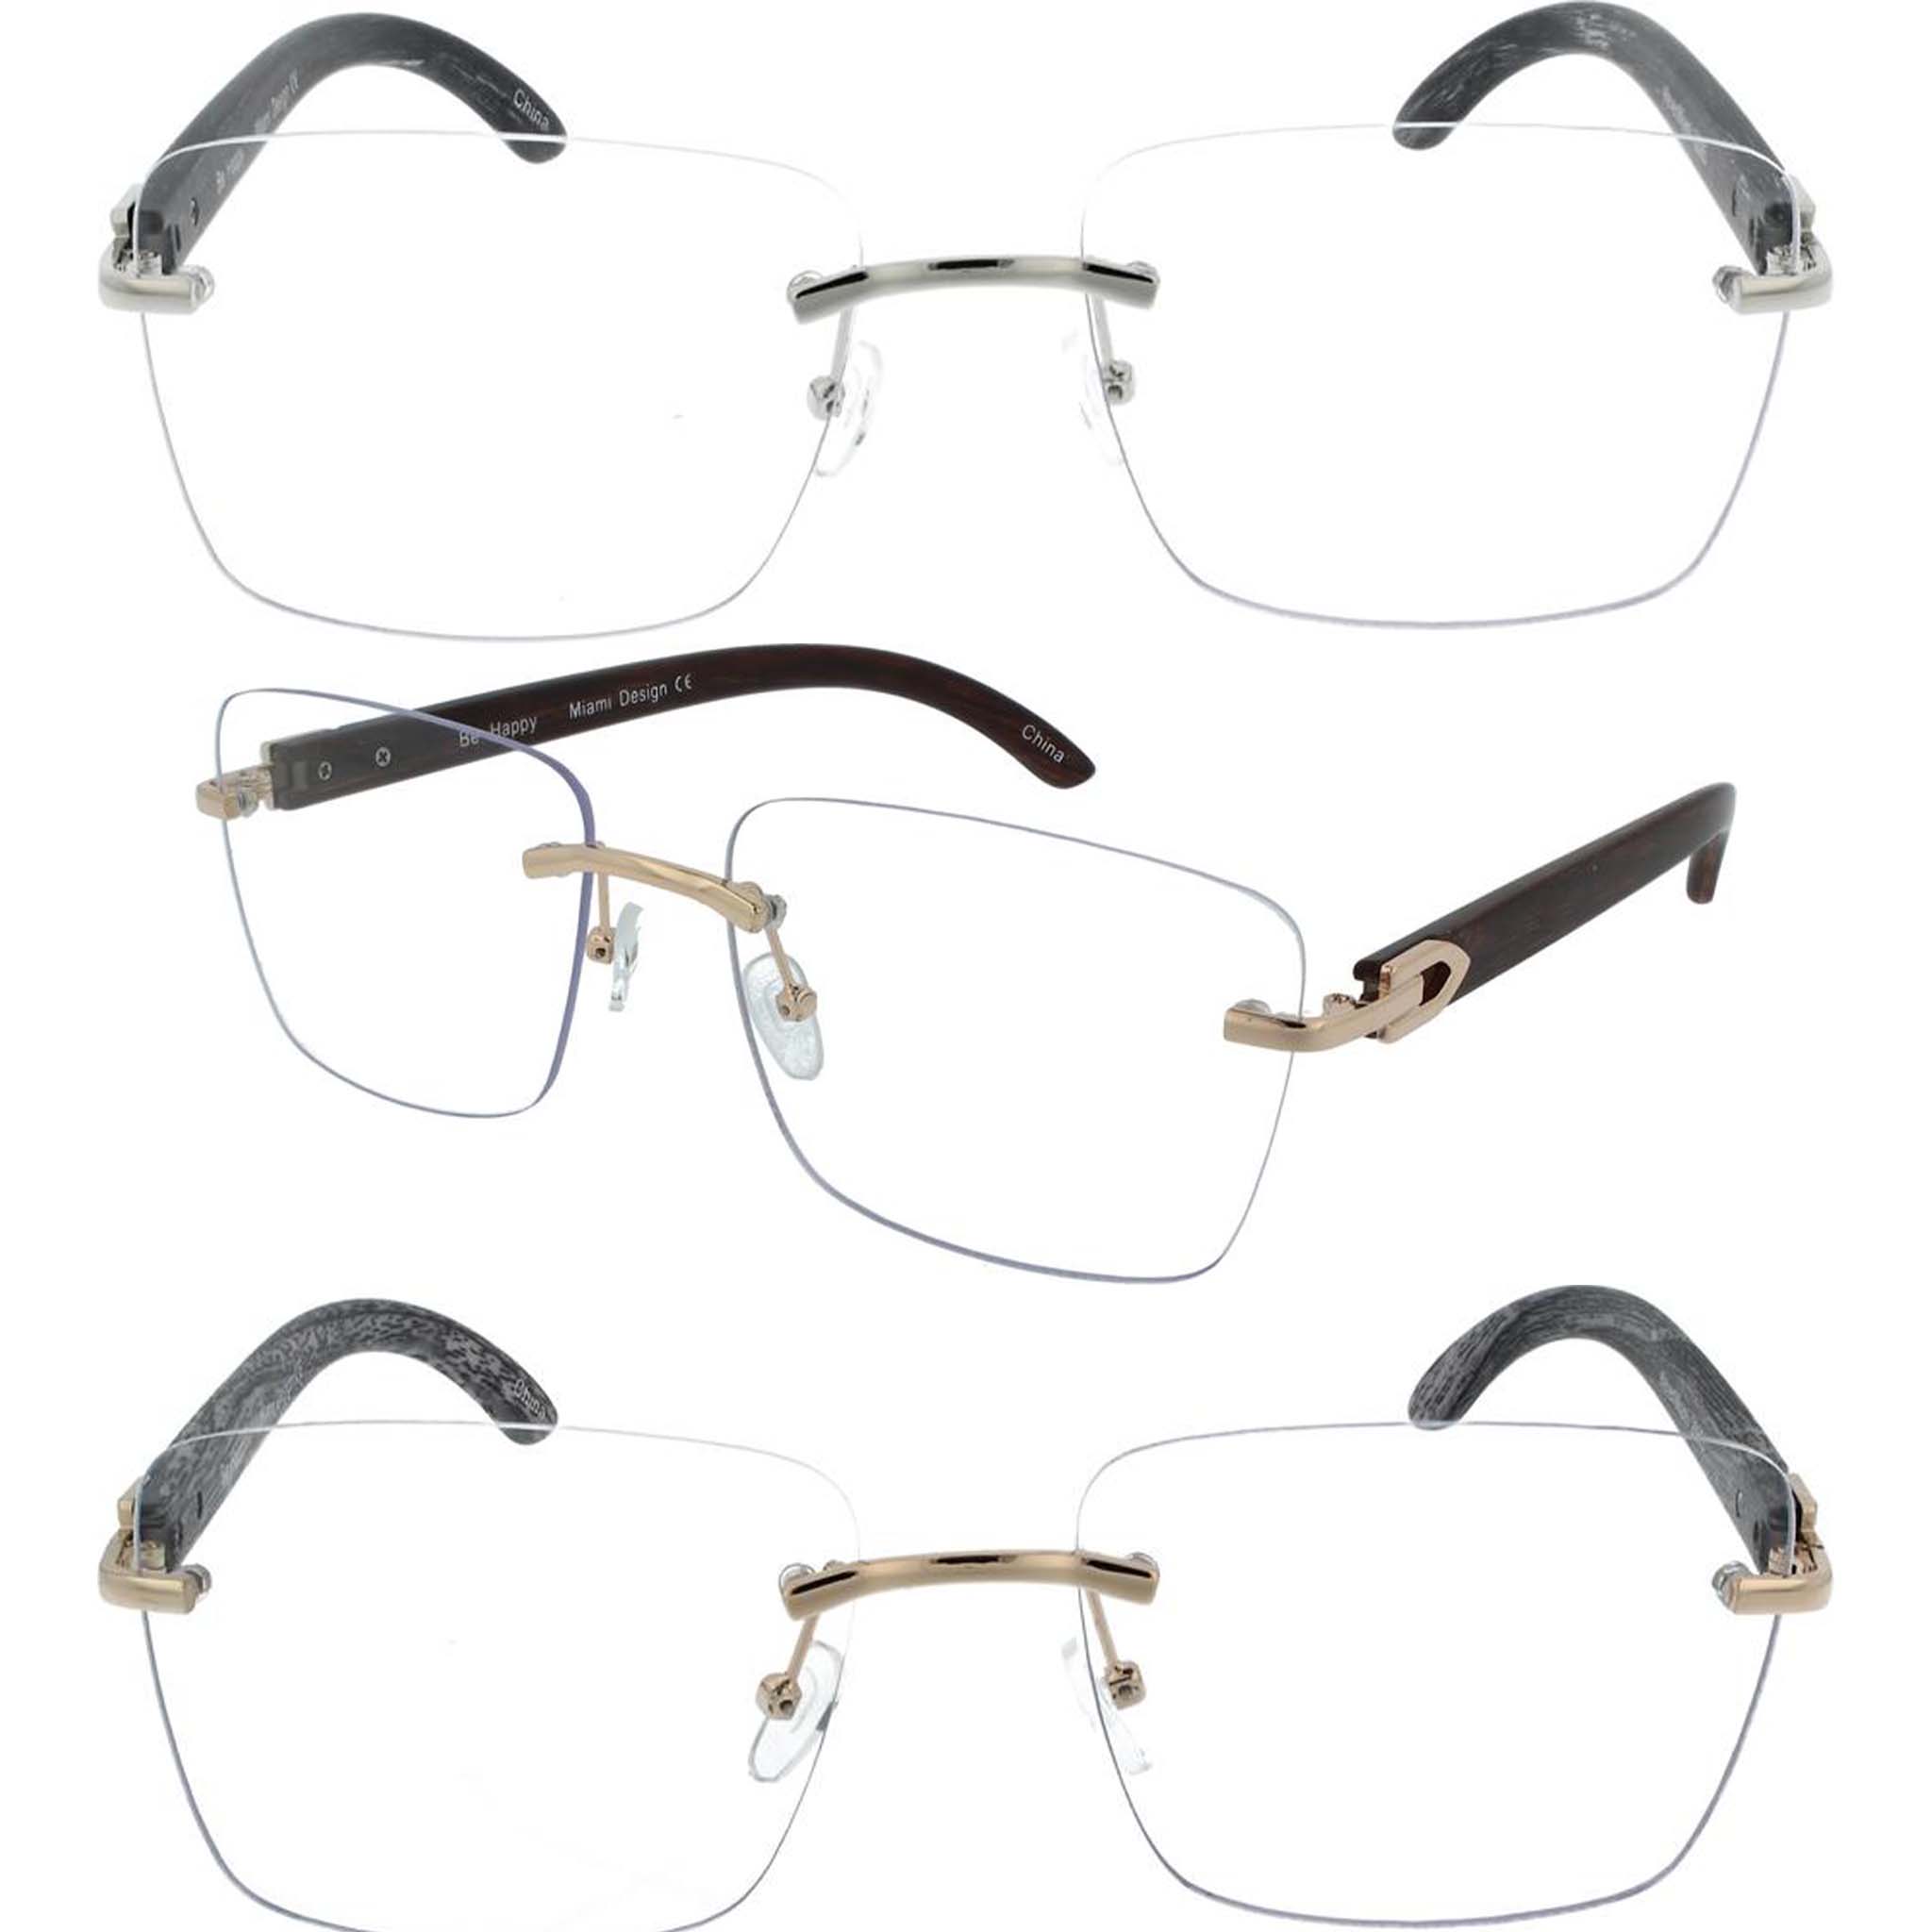 11 Miami Fashion Clear Lens Glasses